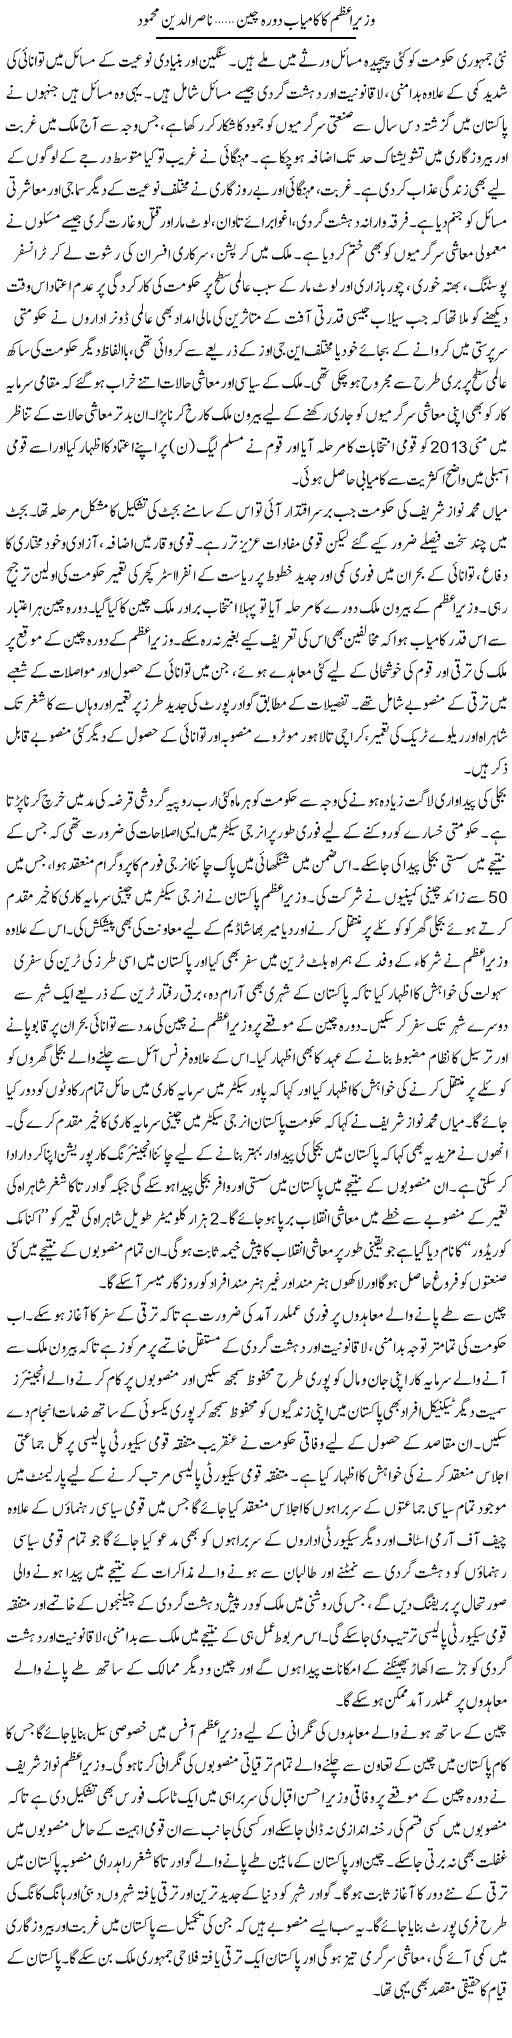 Wazeer e Azam Ka Kamiab Dora Cheen | Nasir Udin Mehmood | Daily Urdu Columns